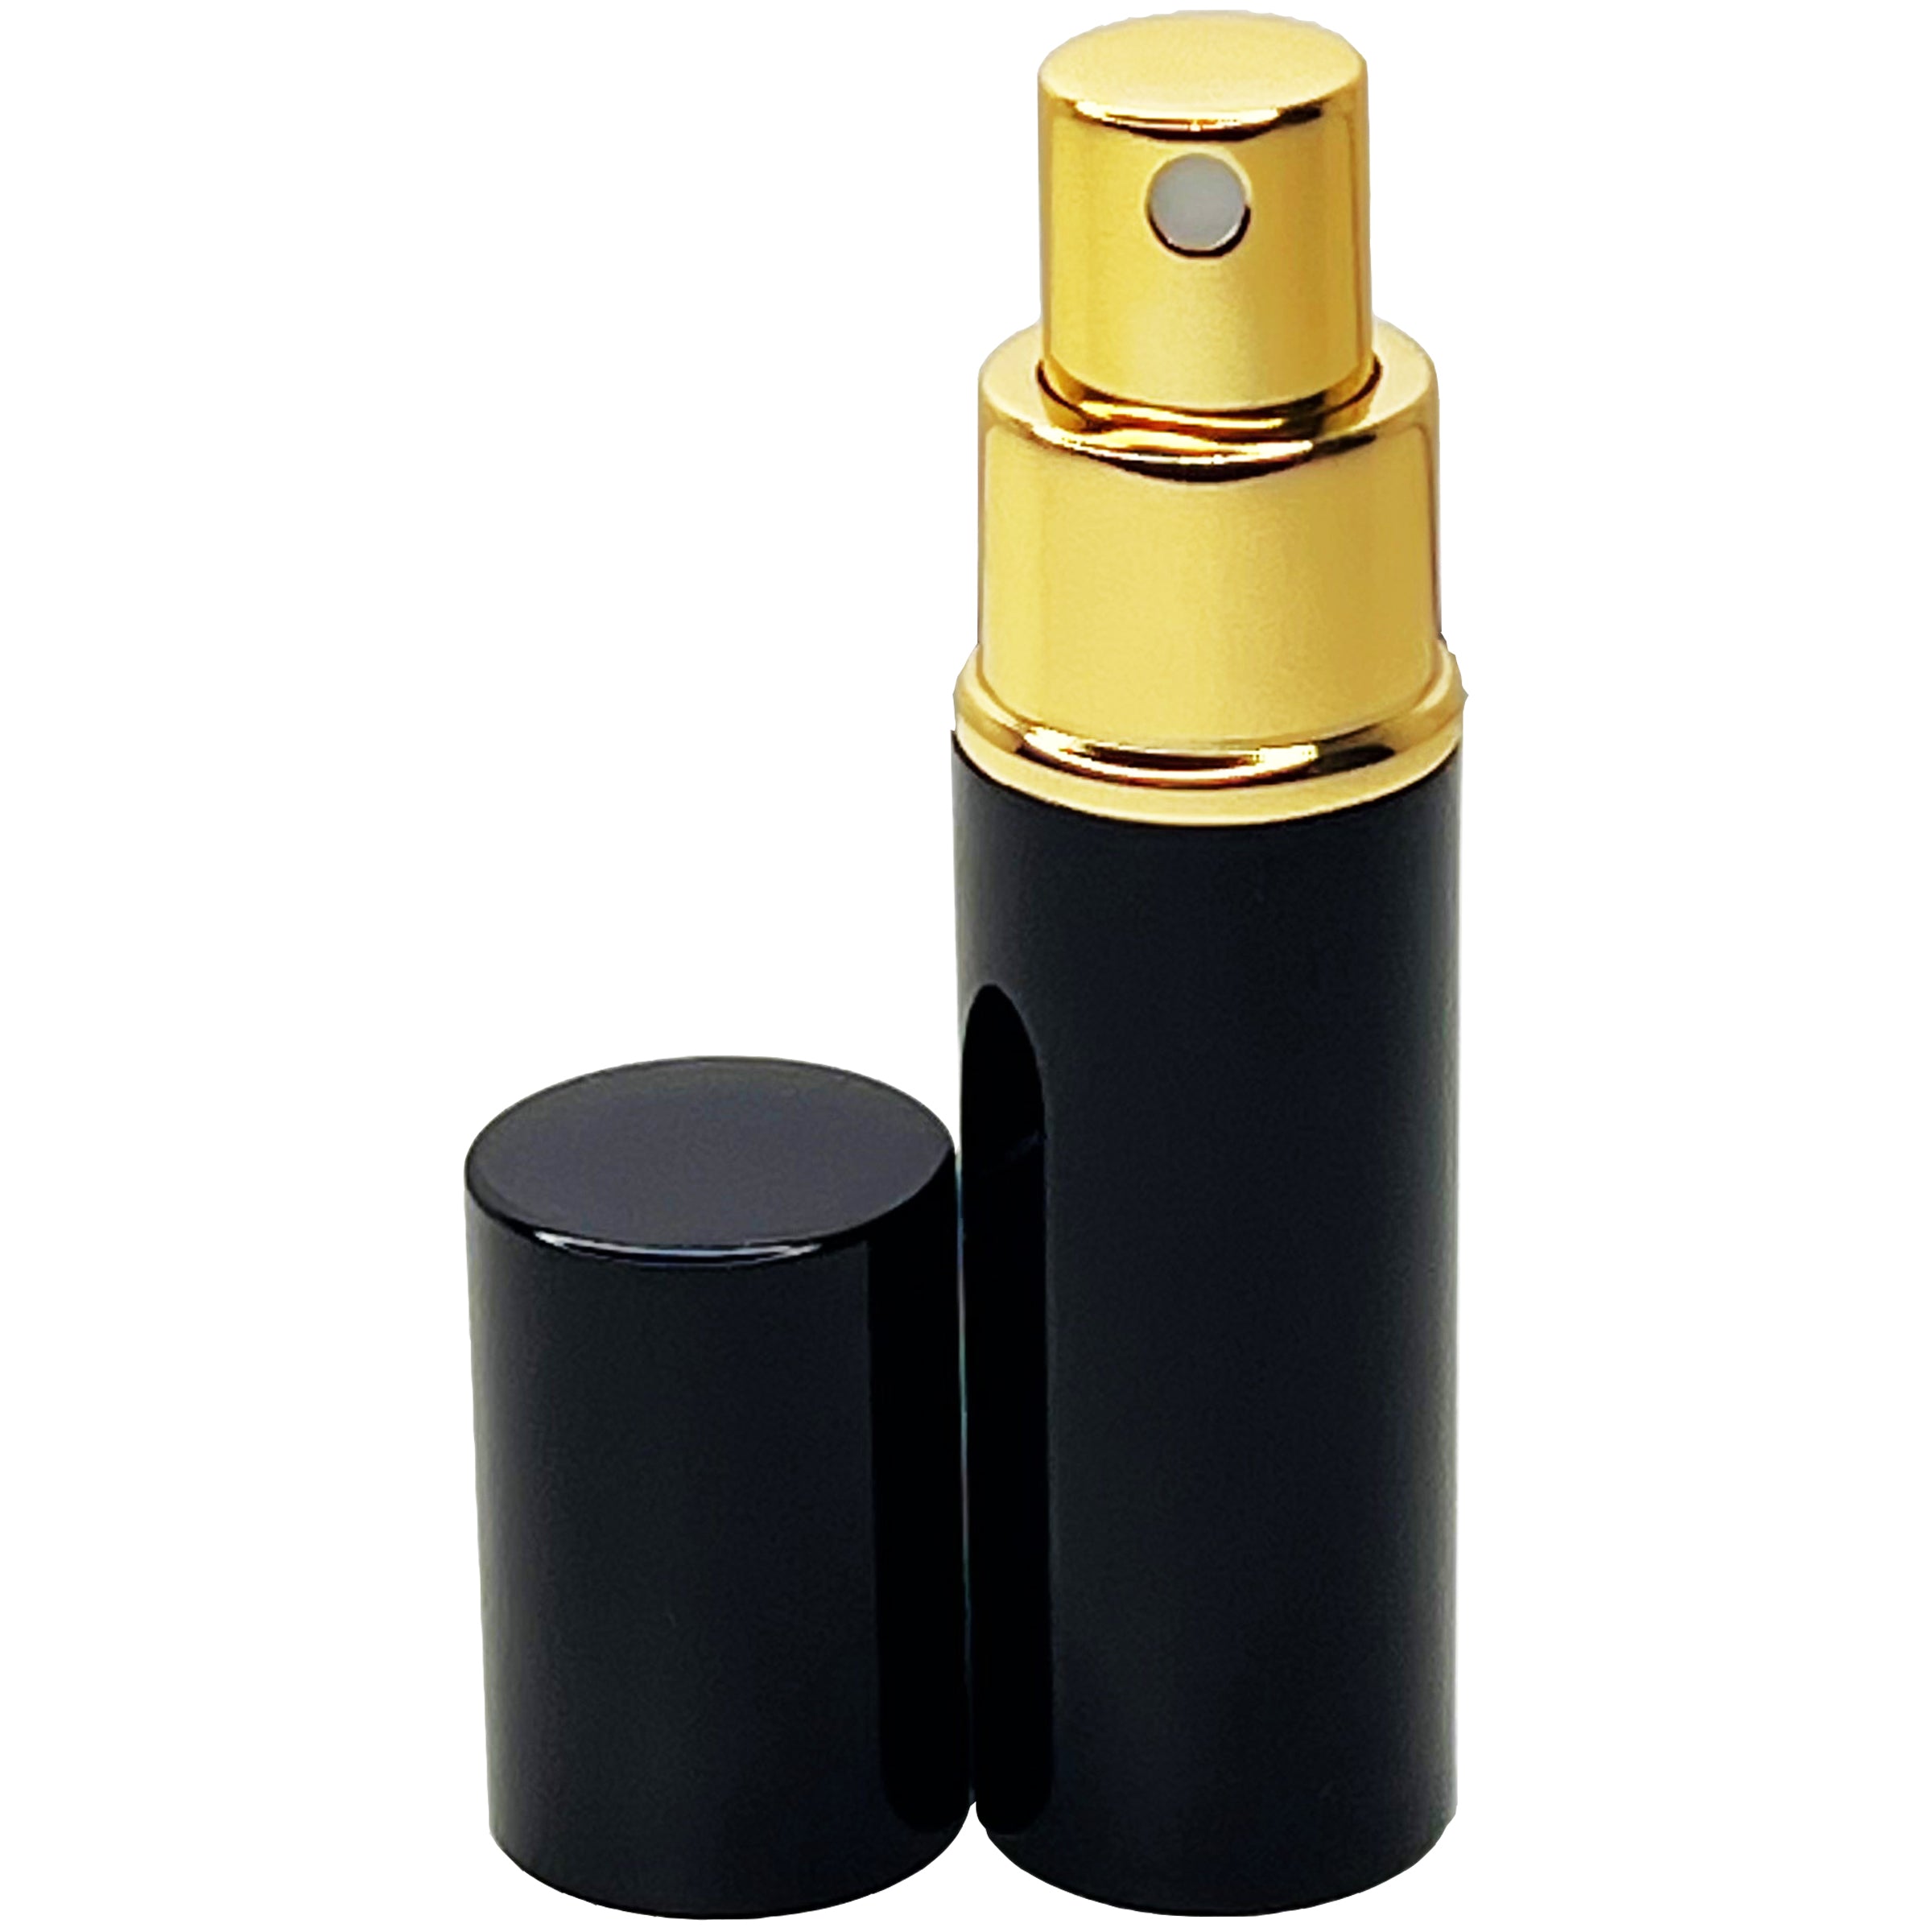 10ml 0.33oz high end aluminum shell glass perfume bottles sprayers